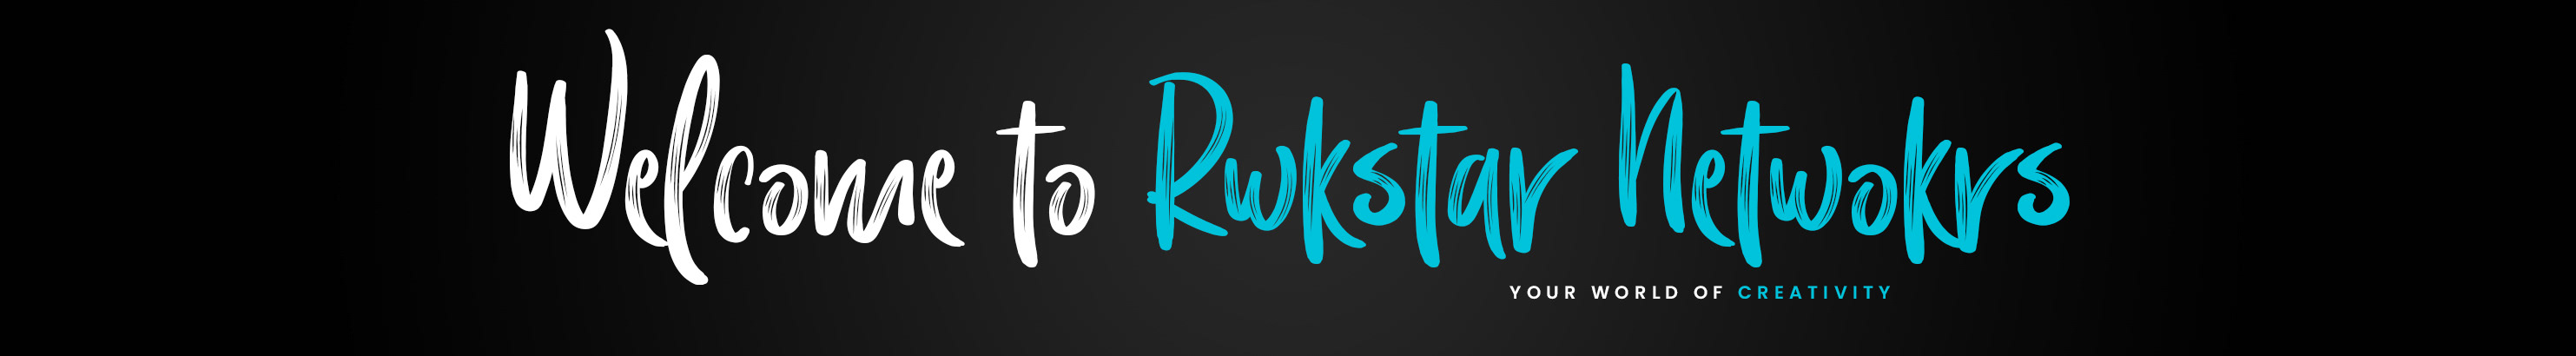 Rwkstar Networks's profile banner